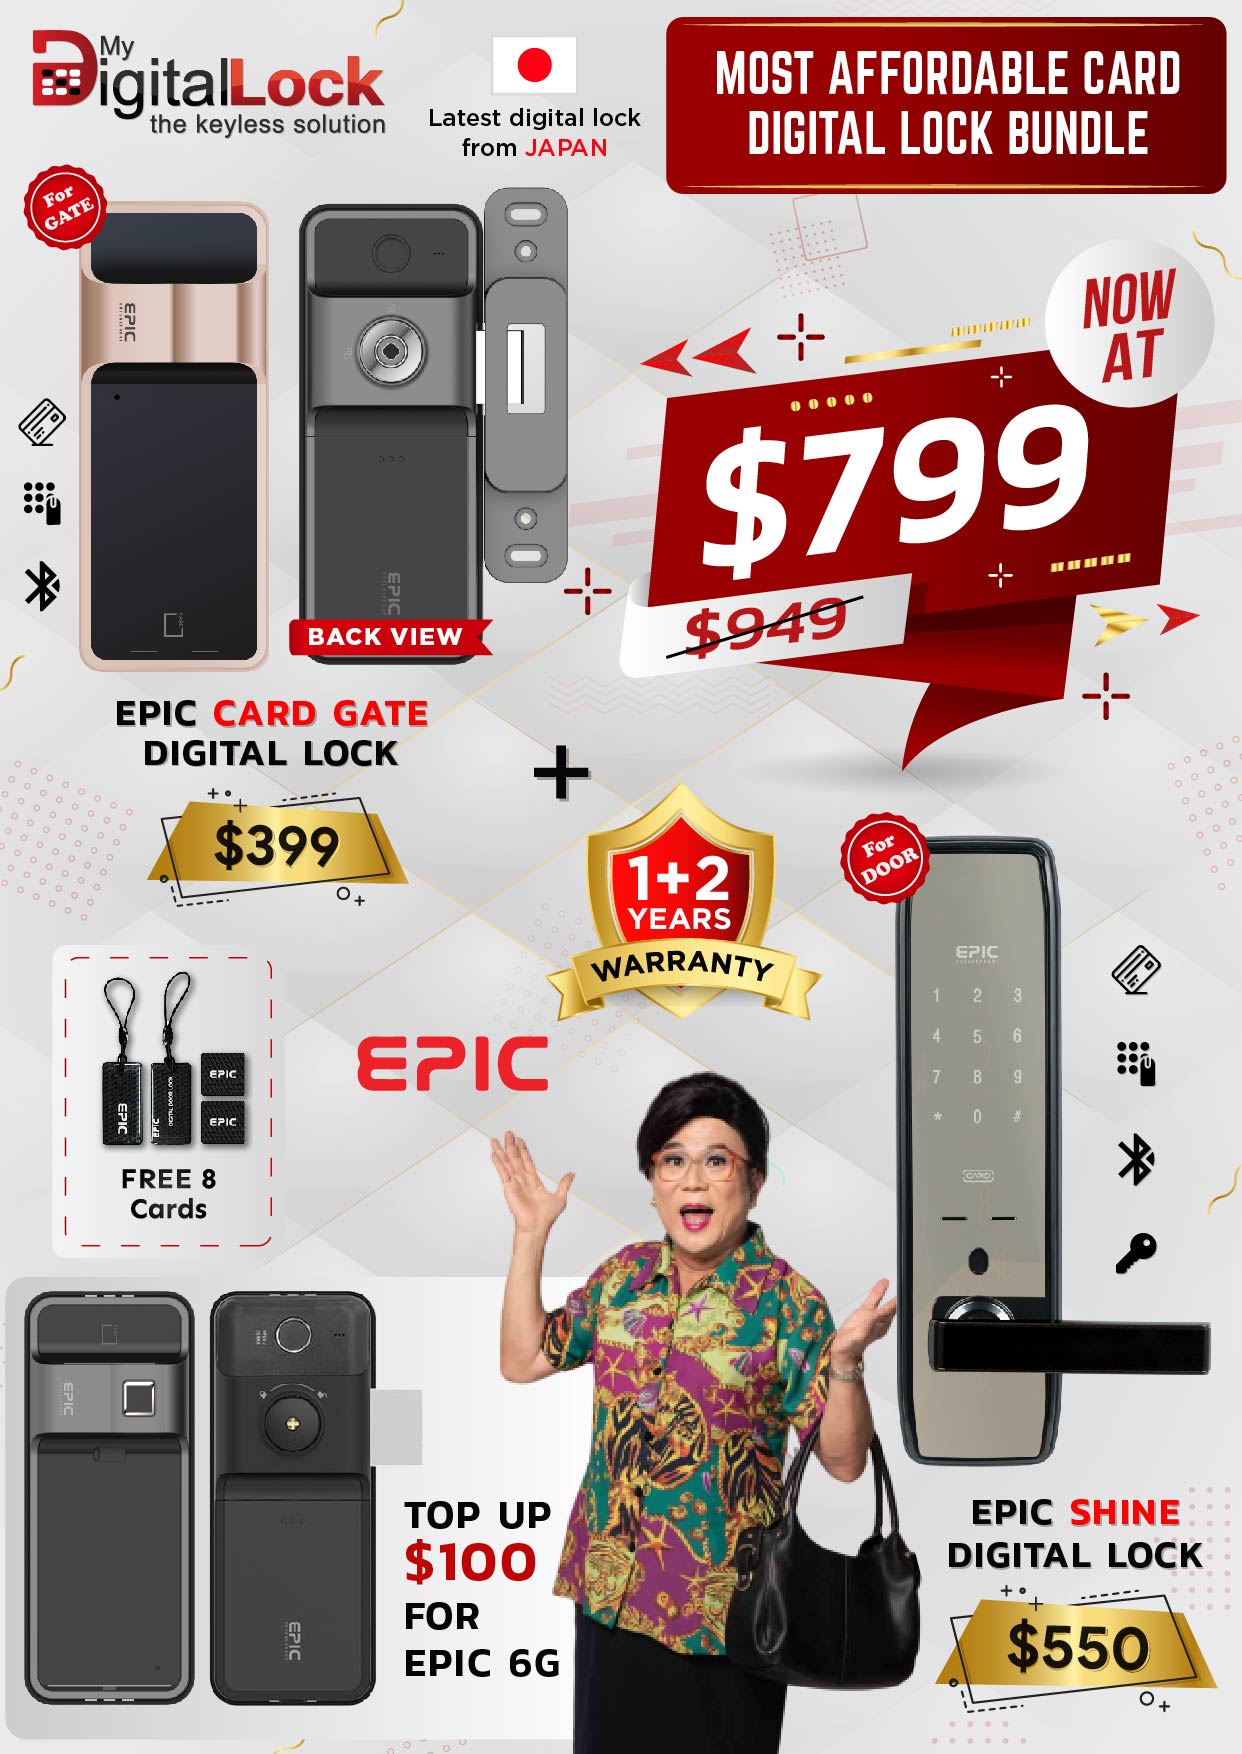 Epic Card Gate & Epic Shine Digital Lock